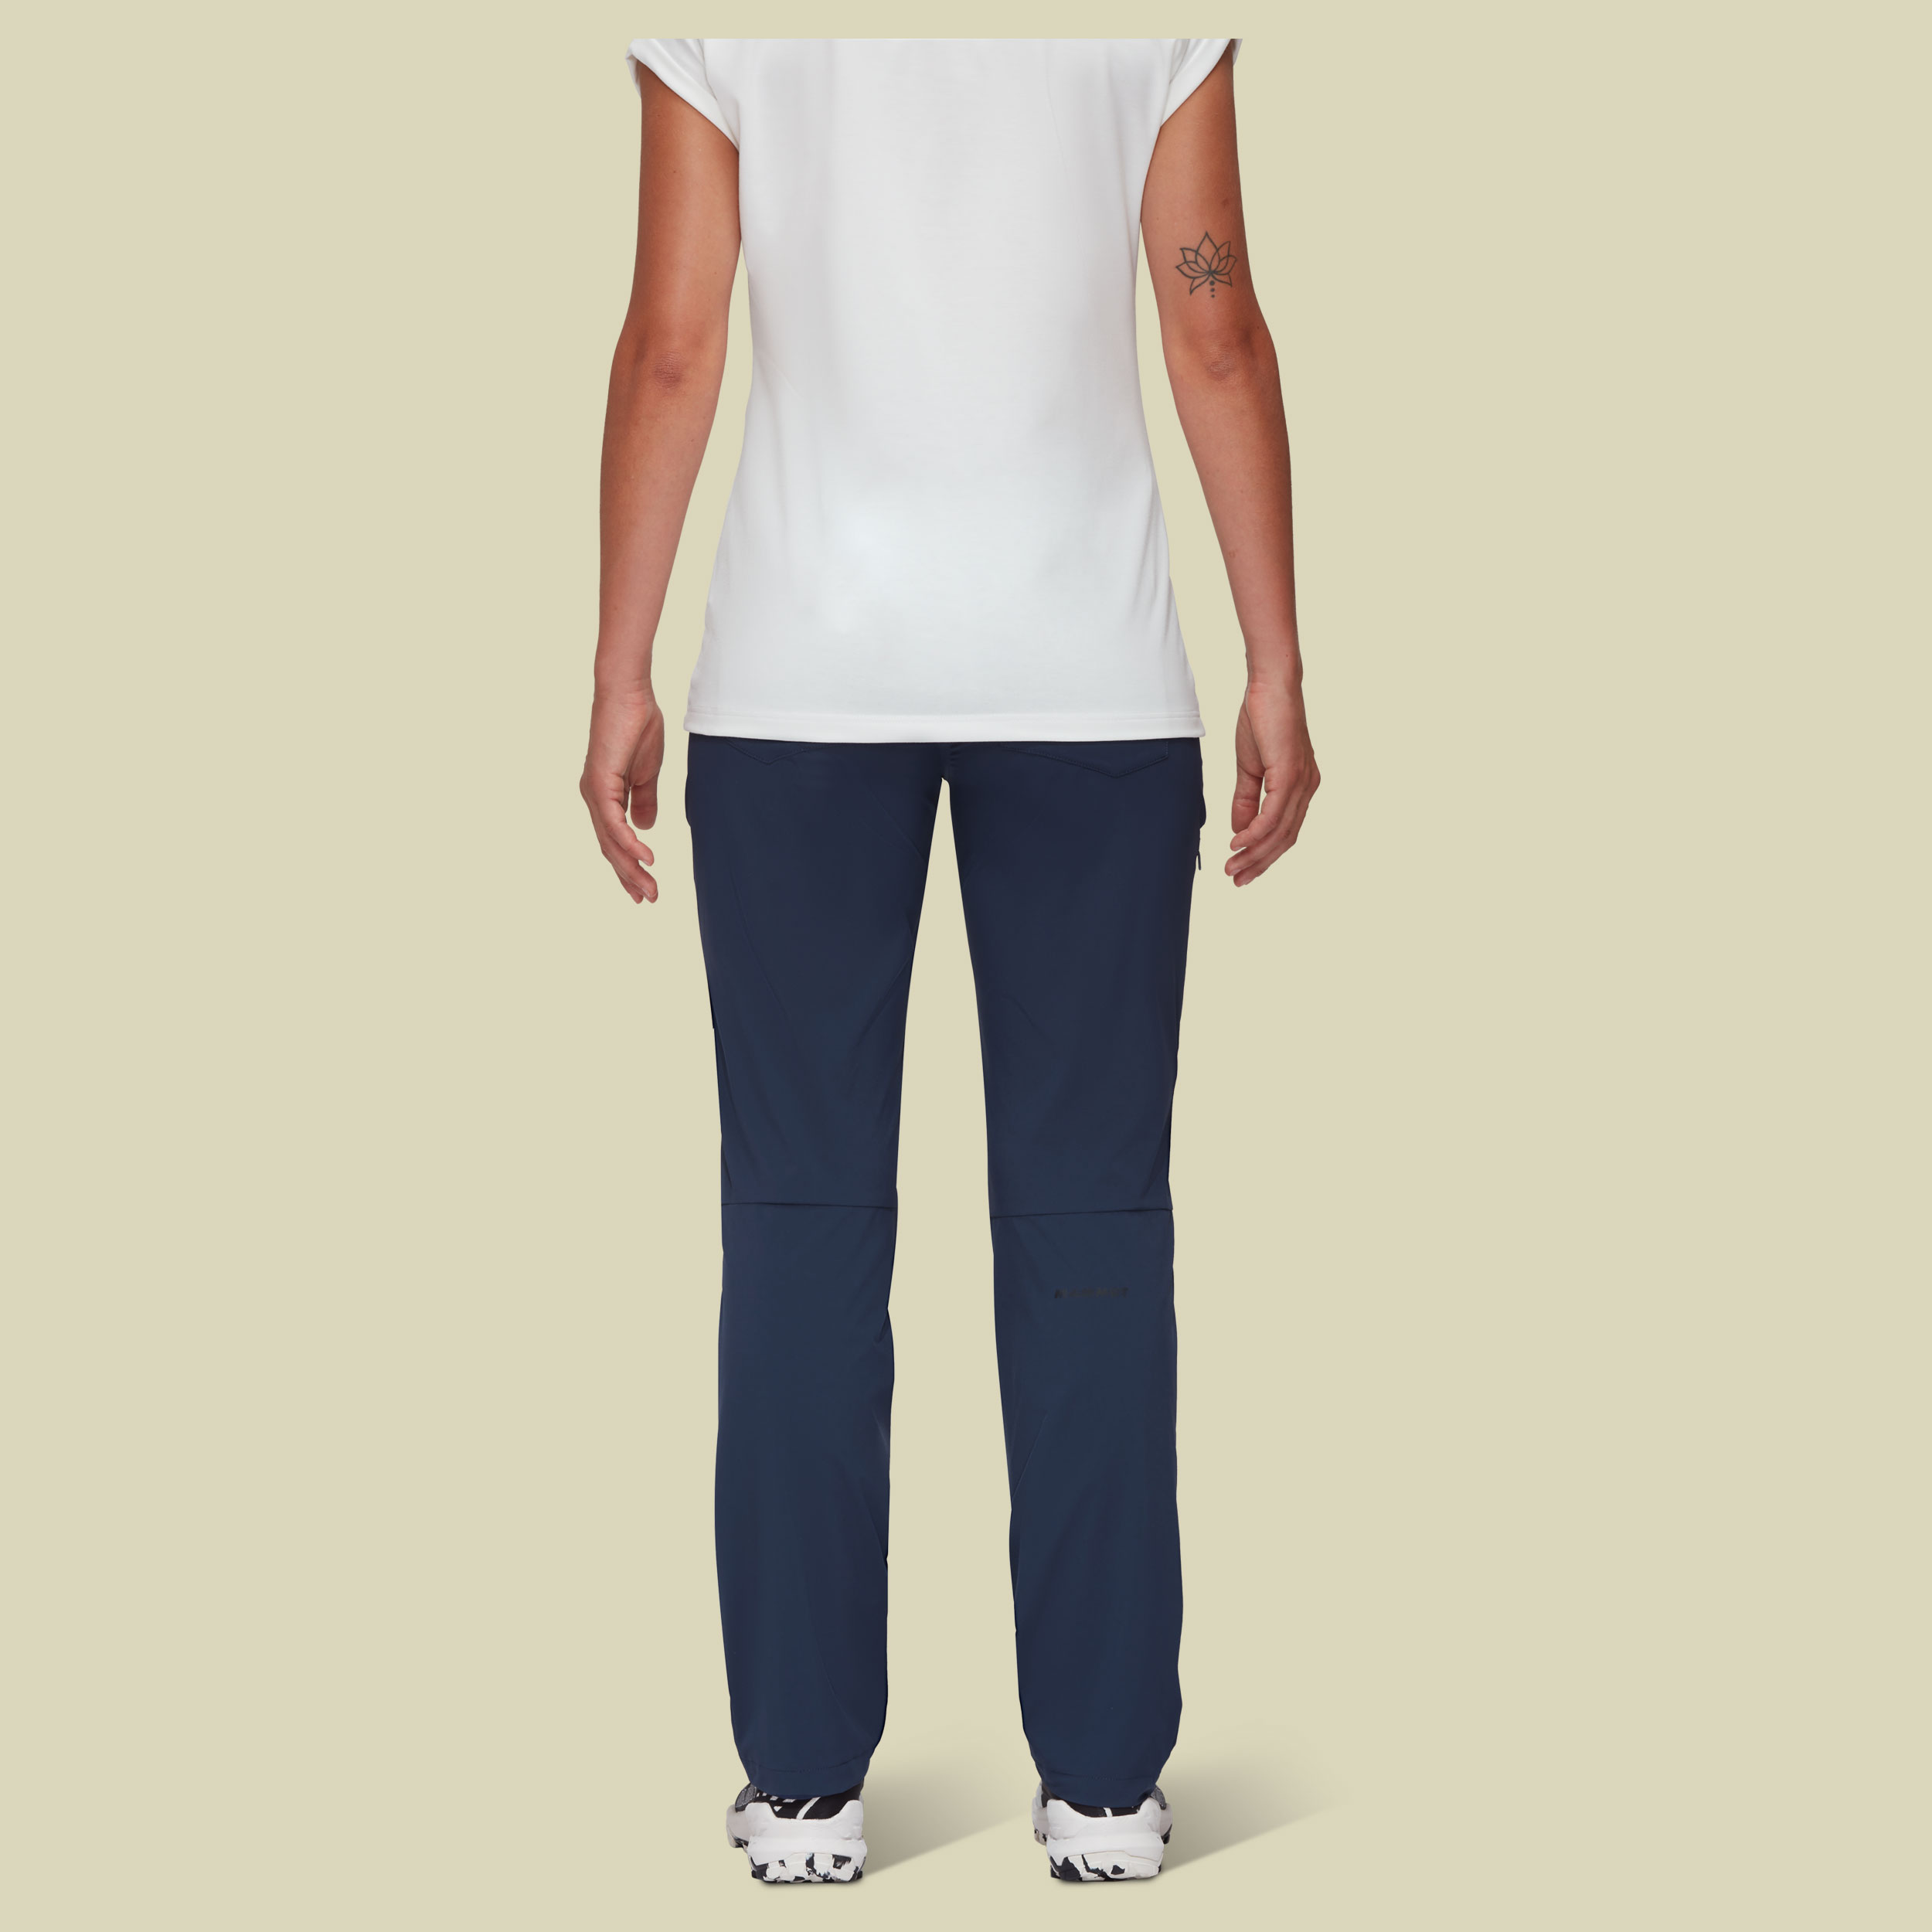 Runbold Pants Women Größe 38-short Farbe marine